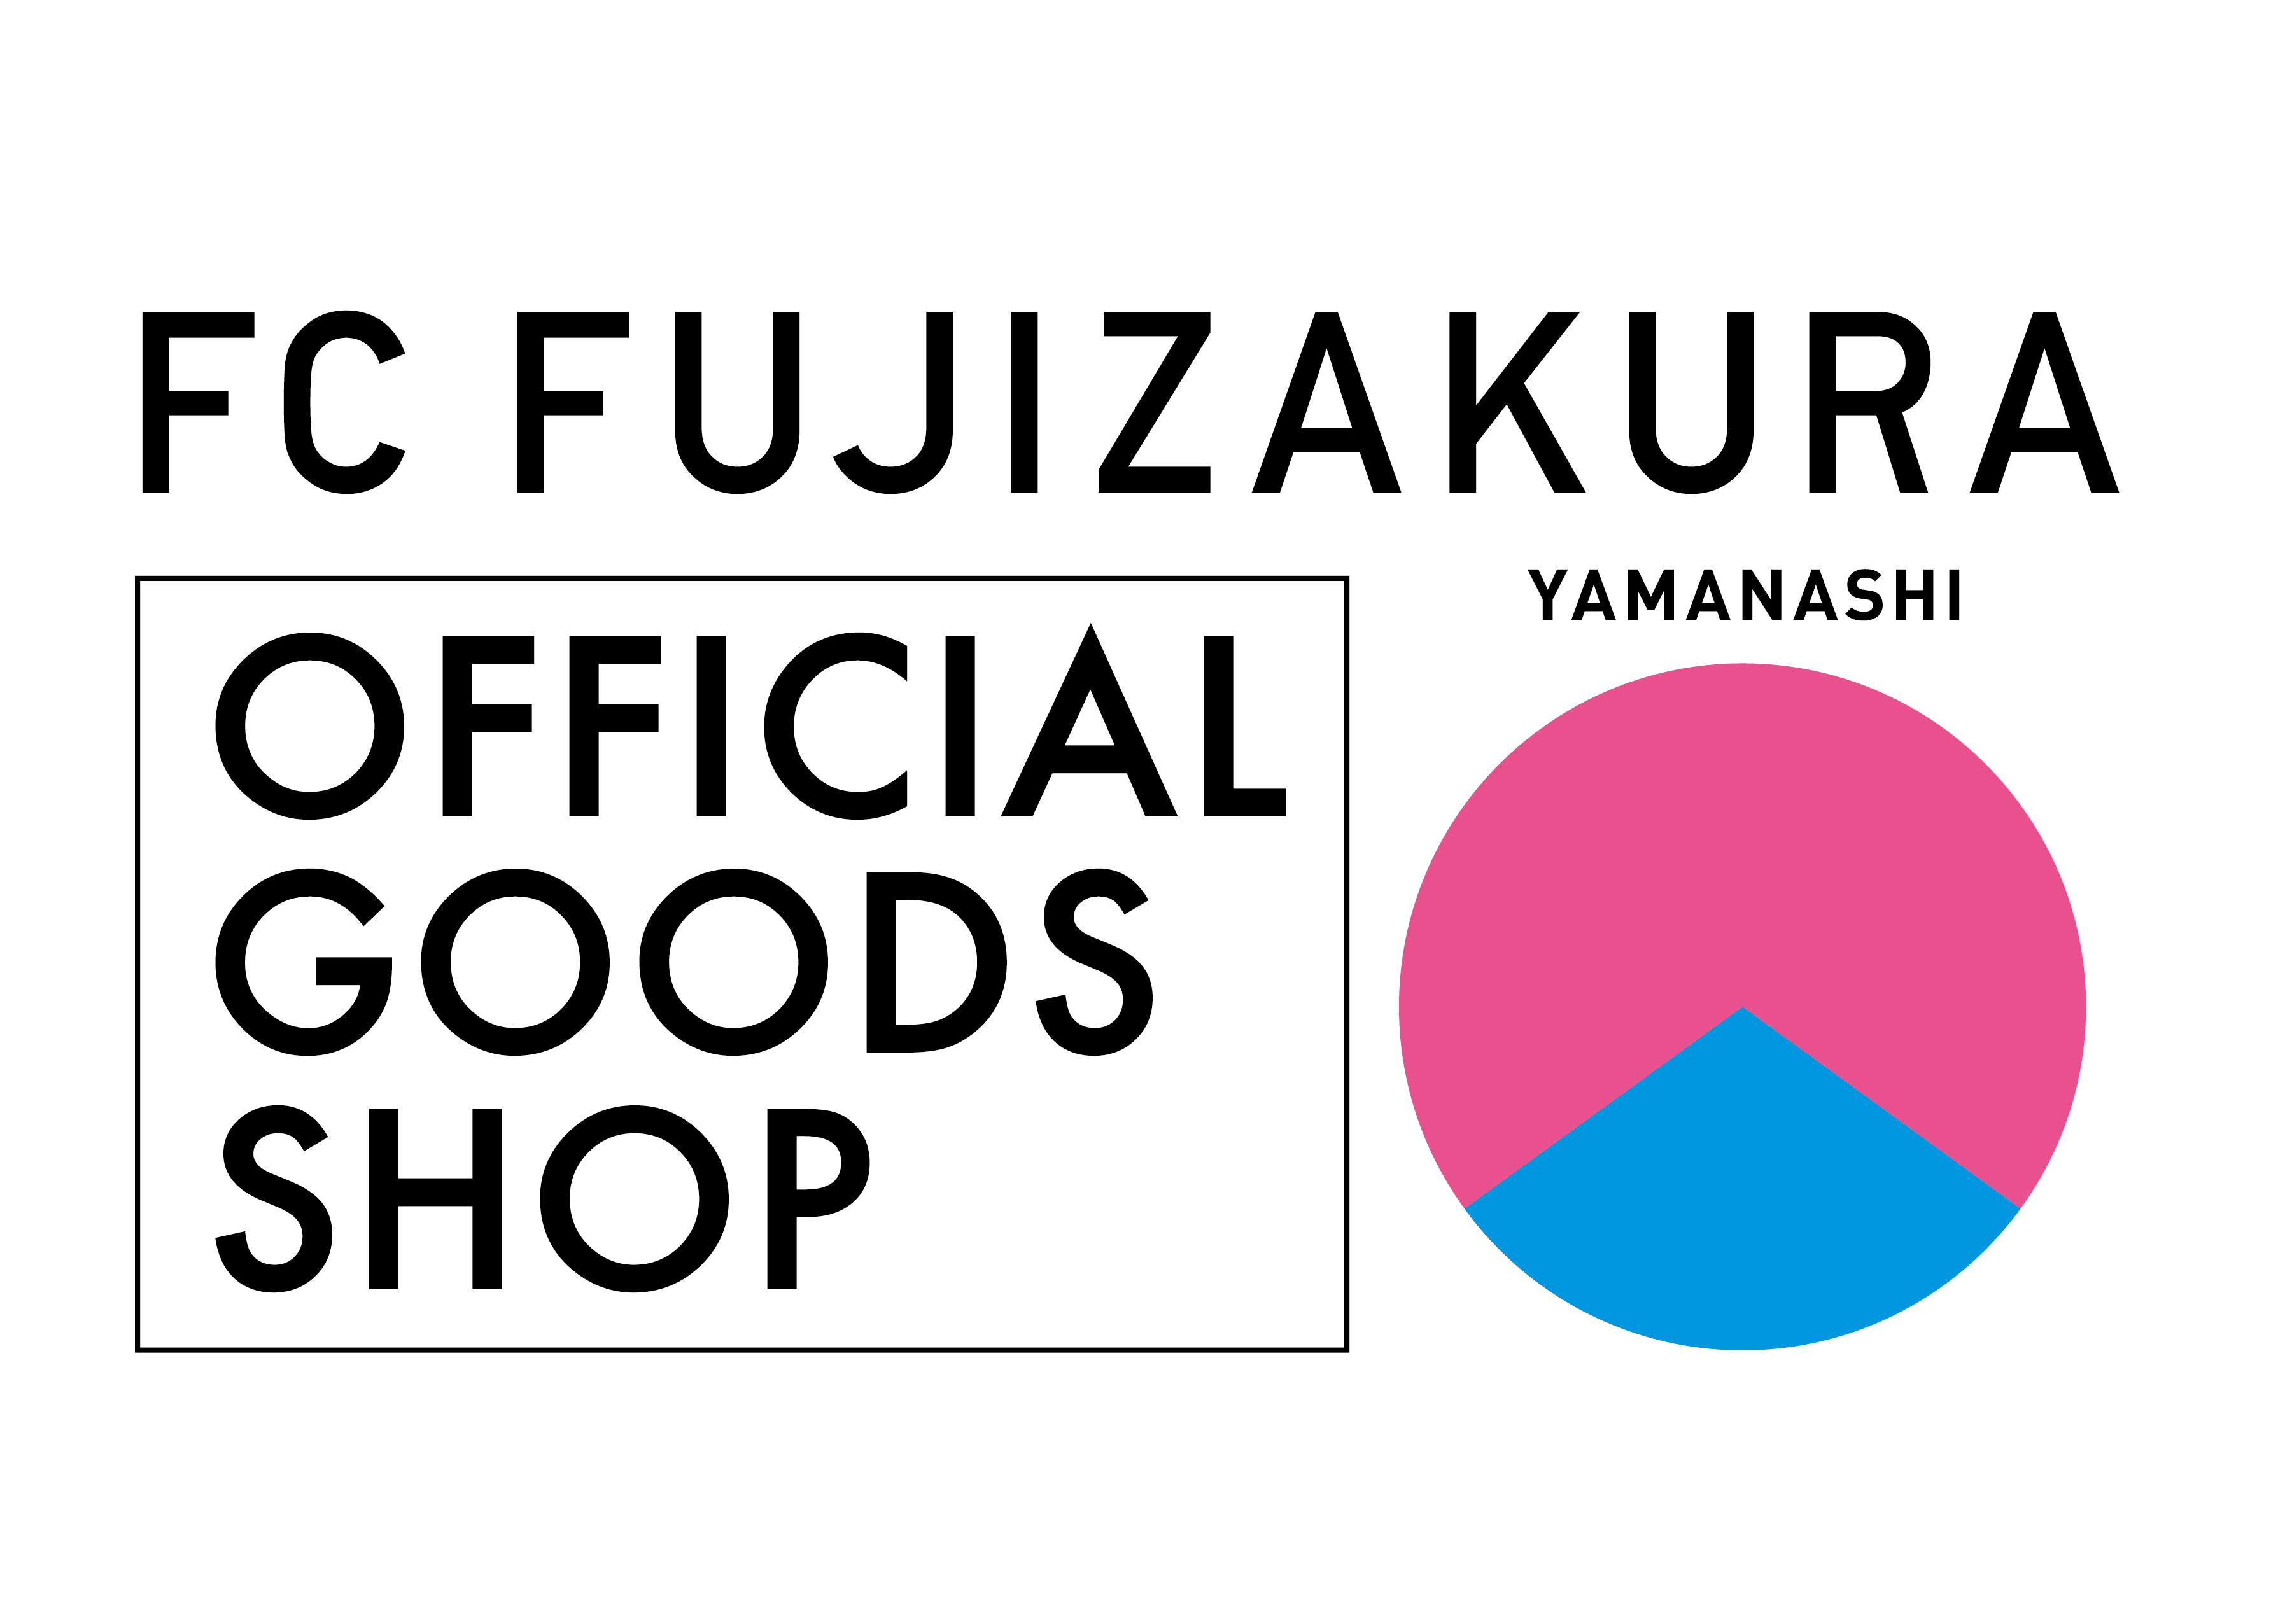 FCfujizakura